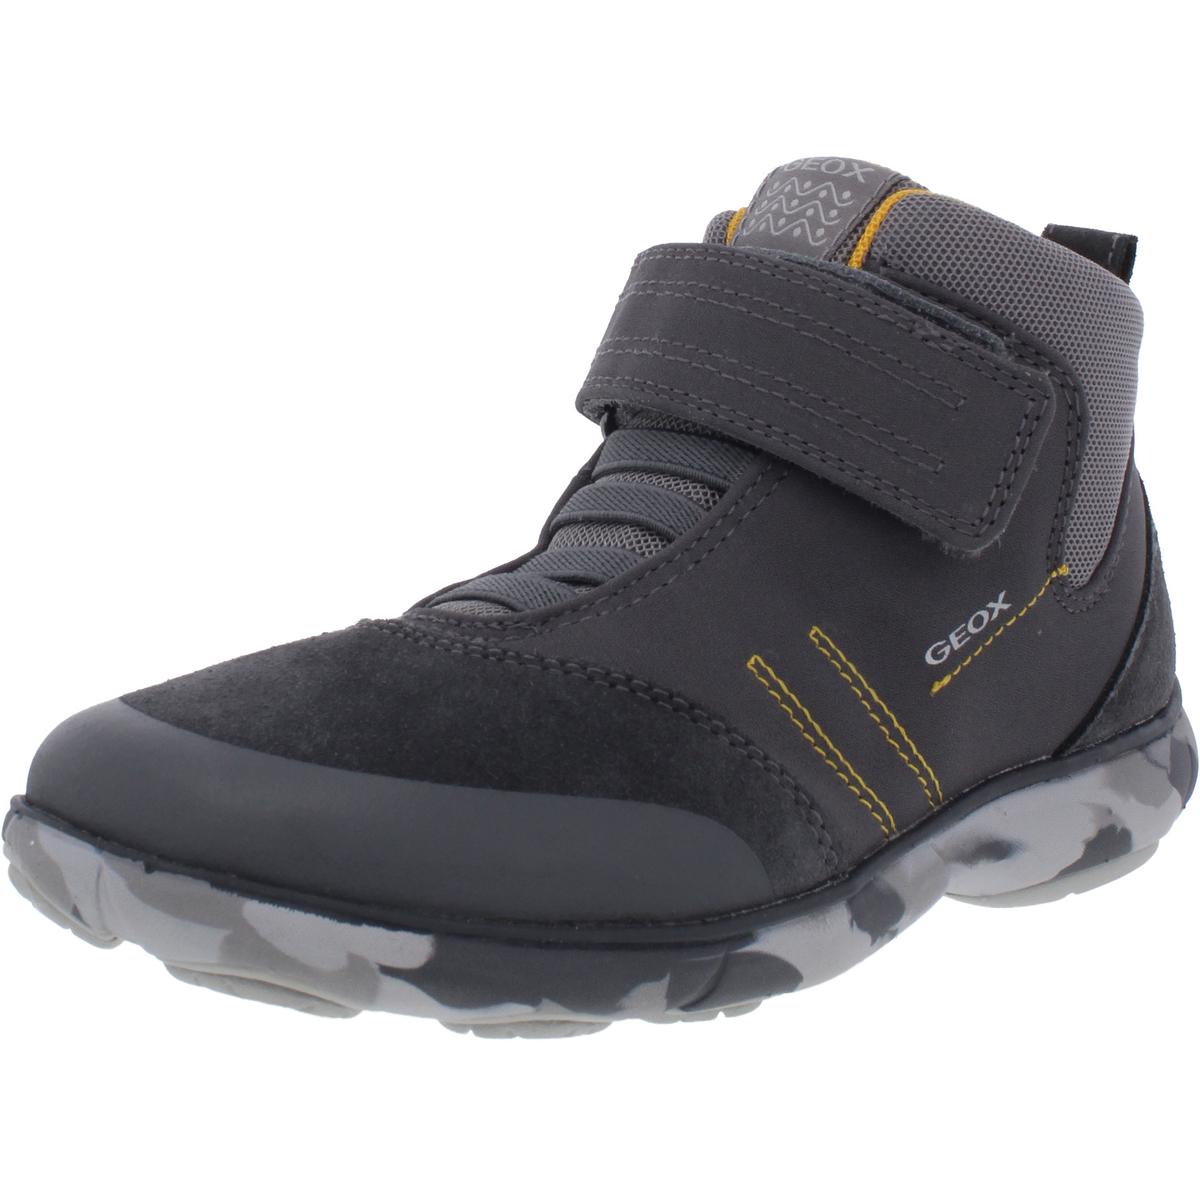 Vulkanisch geest Krijger Geox Respira Boys Nebula Suede Slip On Trainers Mid-Top Sneakers Shoes BHFO  9241 | eBay